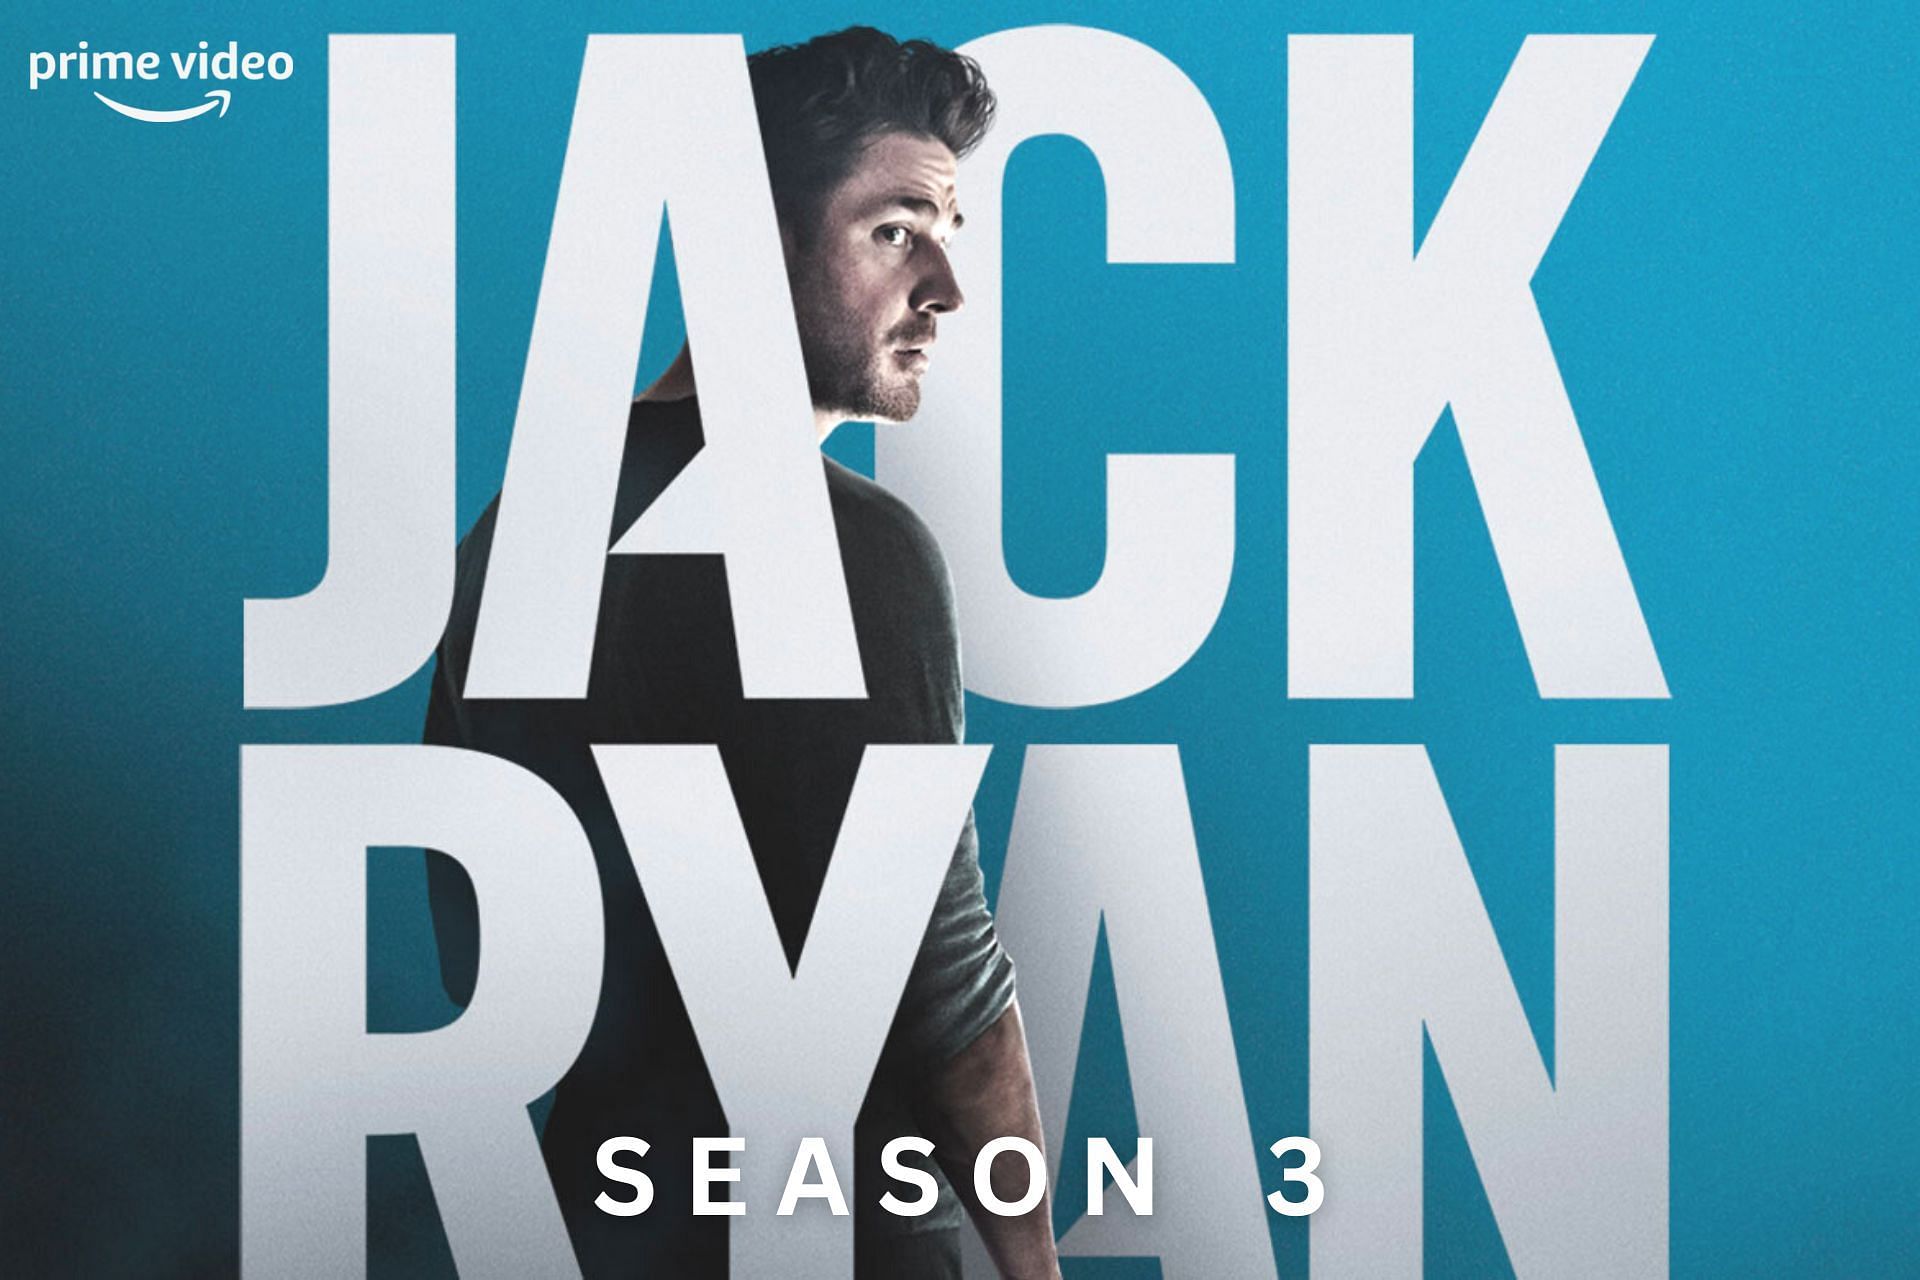 A promotional poster for Jack Ryan season 3 (Image via Prime Video)